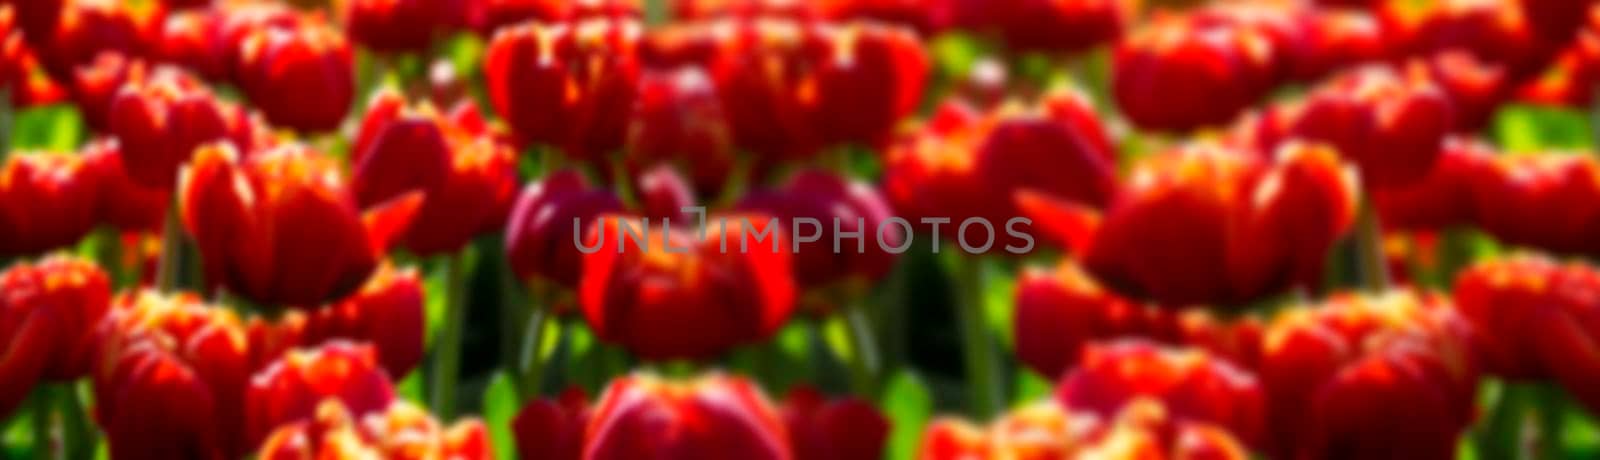 Blurry red tulips banner. Defocused vibrant panorama flowers.